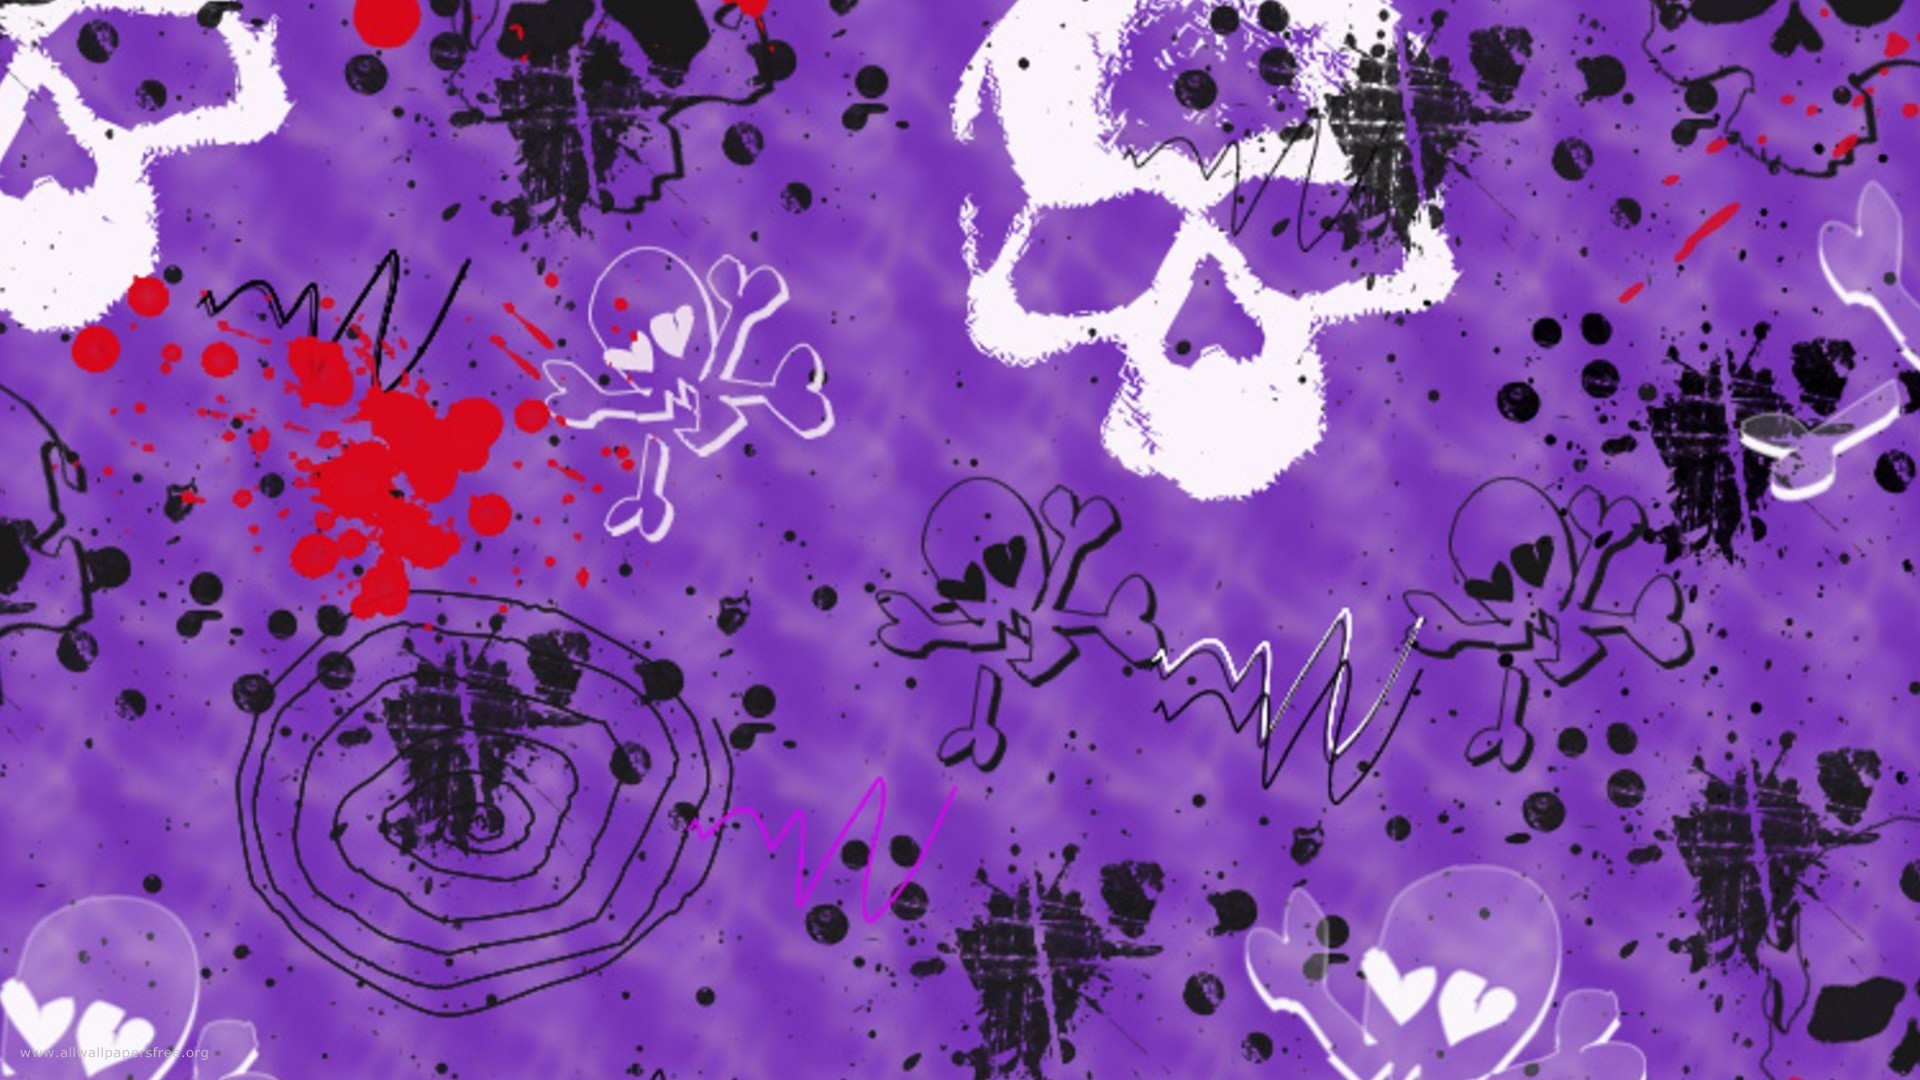 25 Pumpkin Wallpaper Ideas  JackOLantern on Midnight Purple Background   Idea Wallpapers  iPhone WallpapersColor Schemes